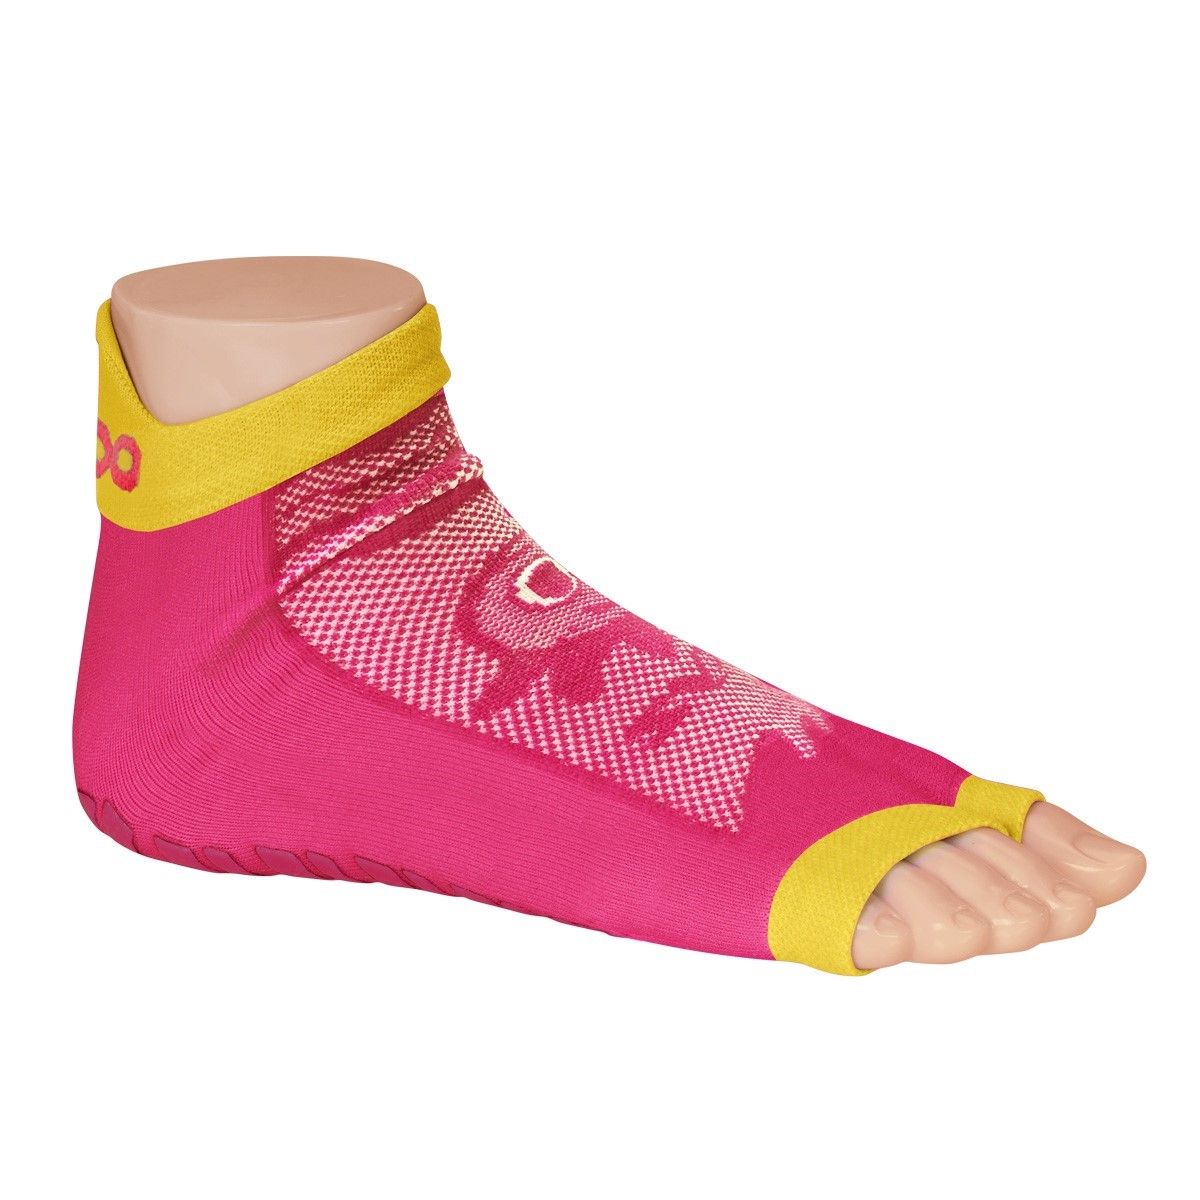 Sweakers Anti-Rutsch-Schwimm-Socken, pink, Größe 27-30